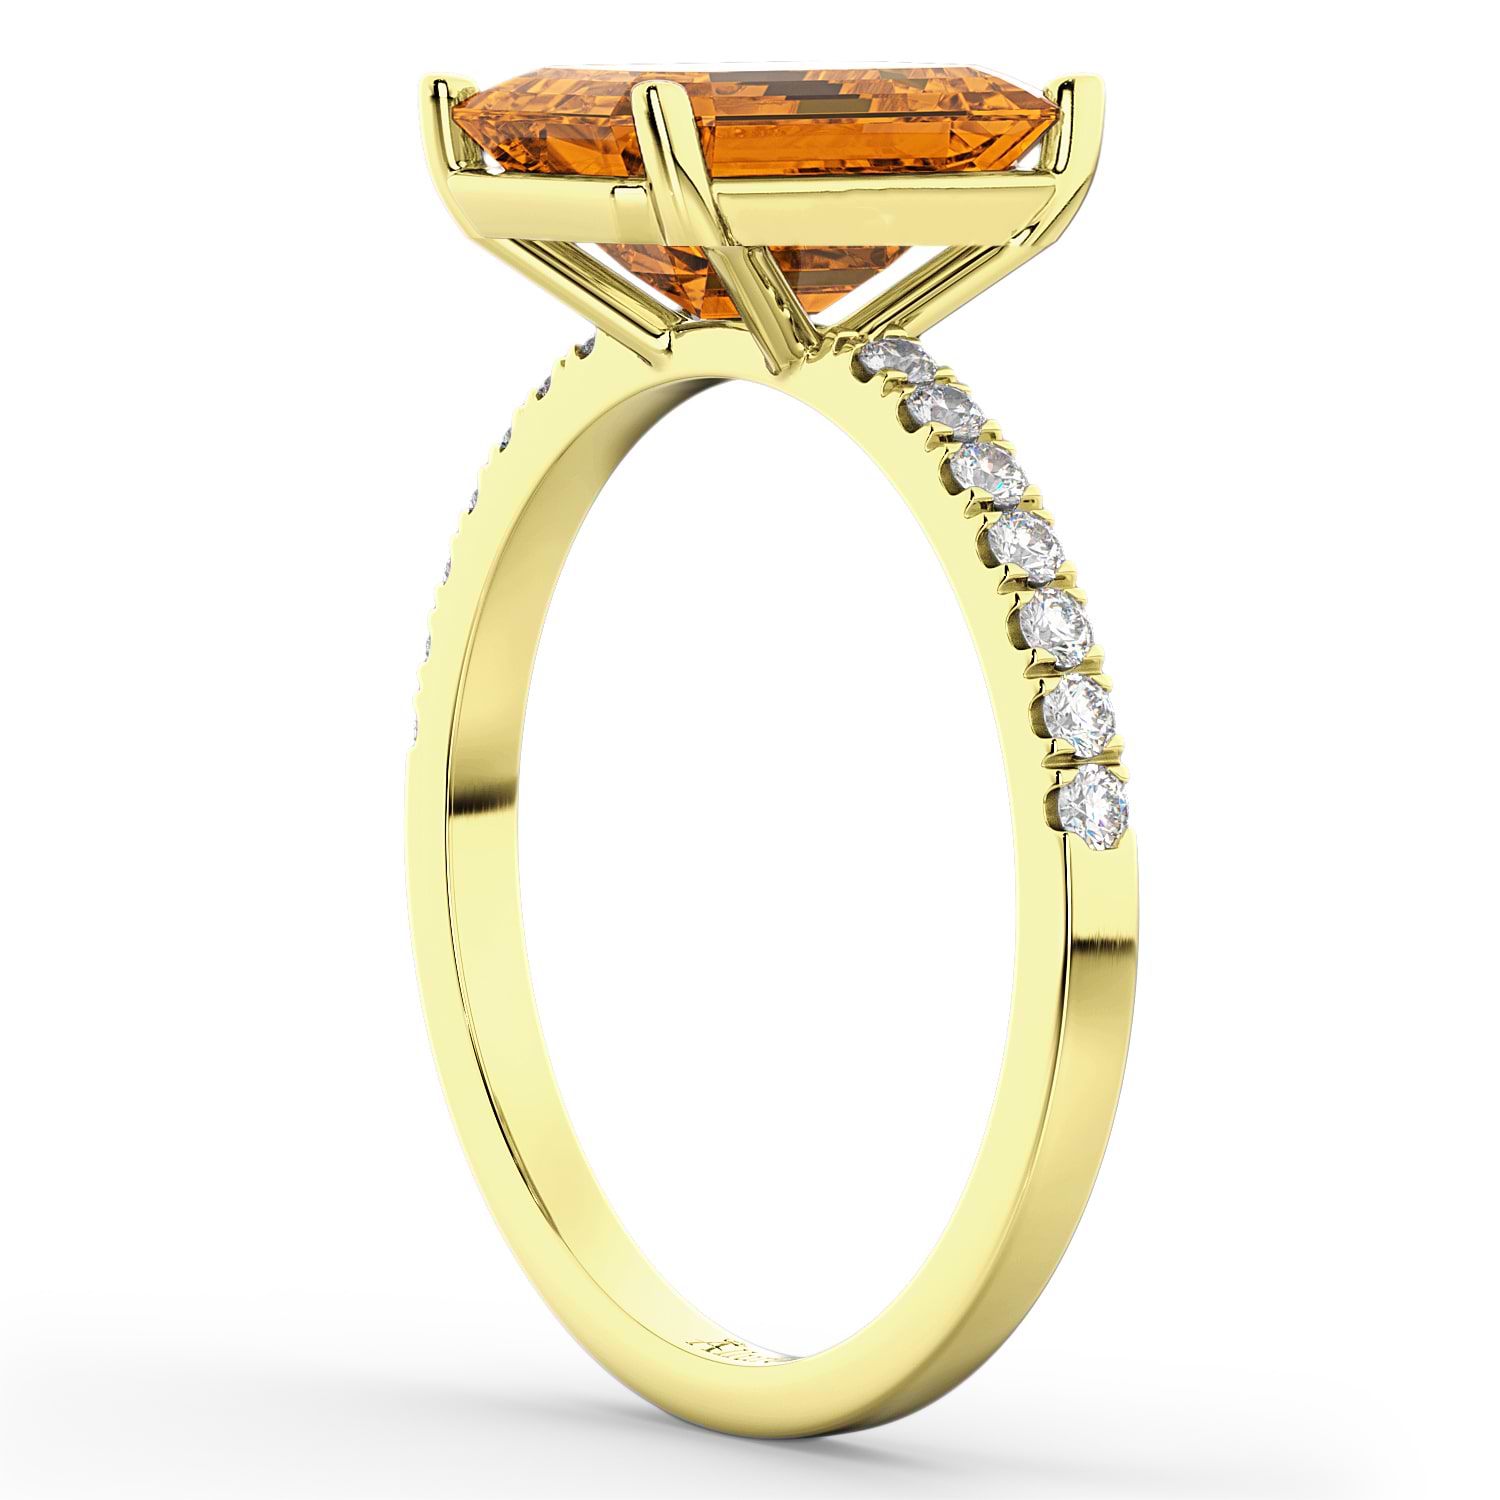 Emerald-Cut Citrine & Diamond Engagement Ring 14k Yellow Gold (2.96ct)